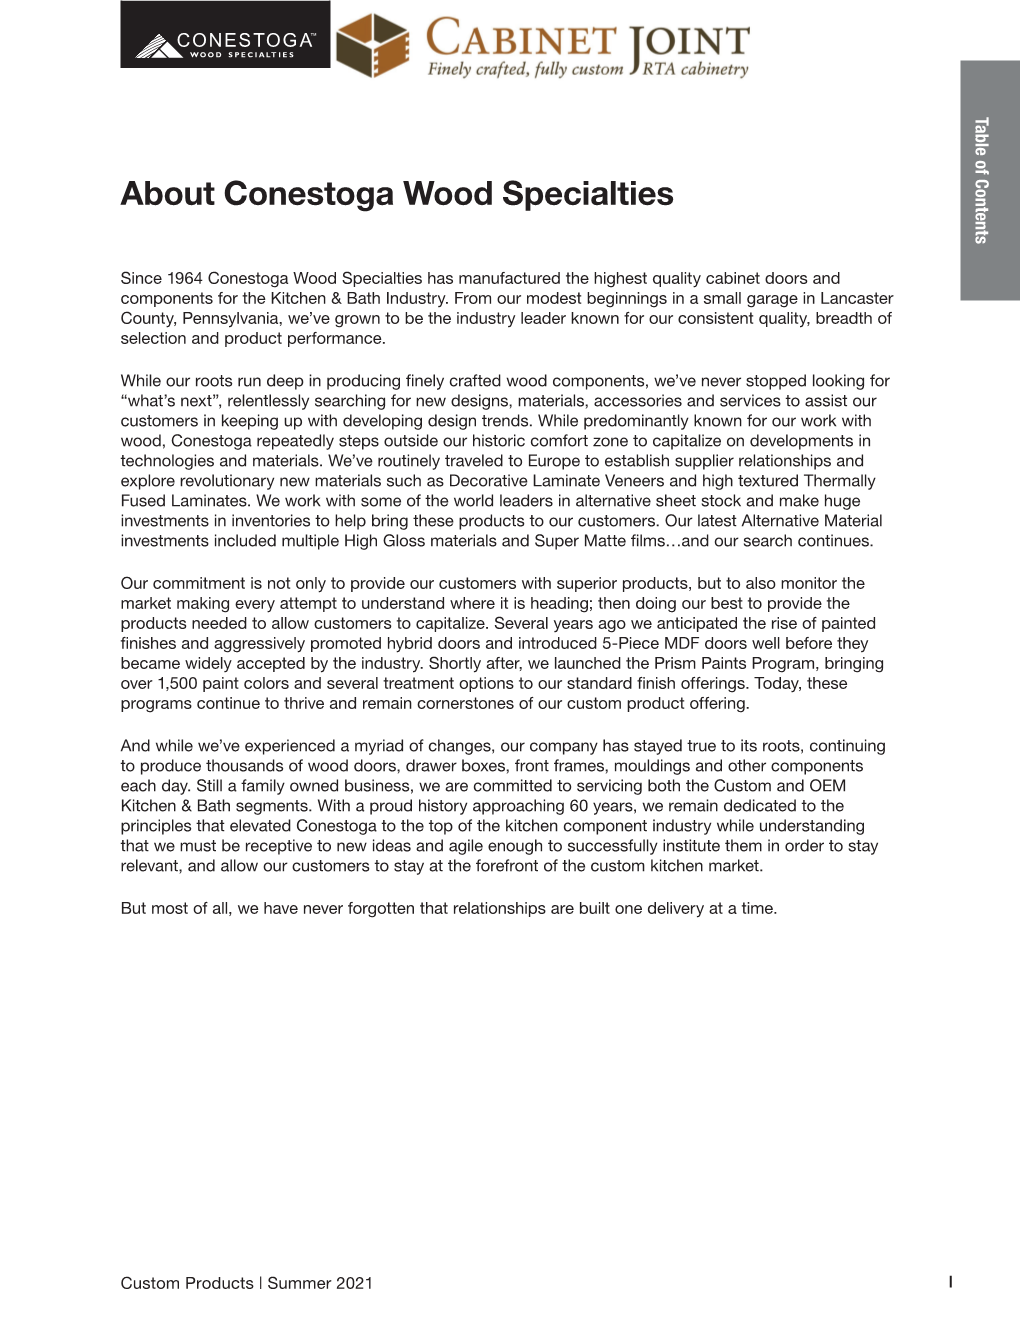 About Conestoga Wood Specialties